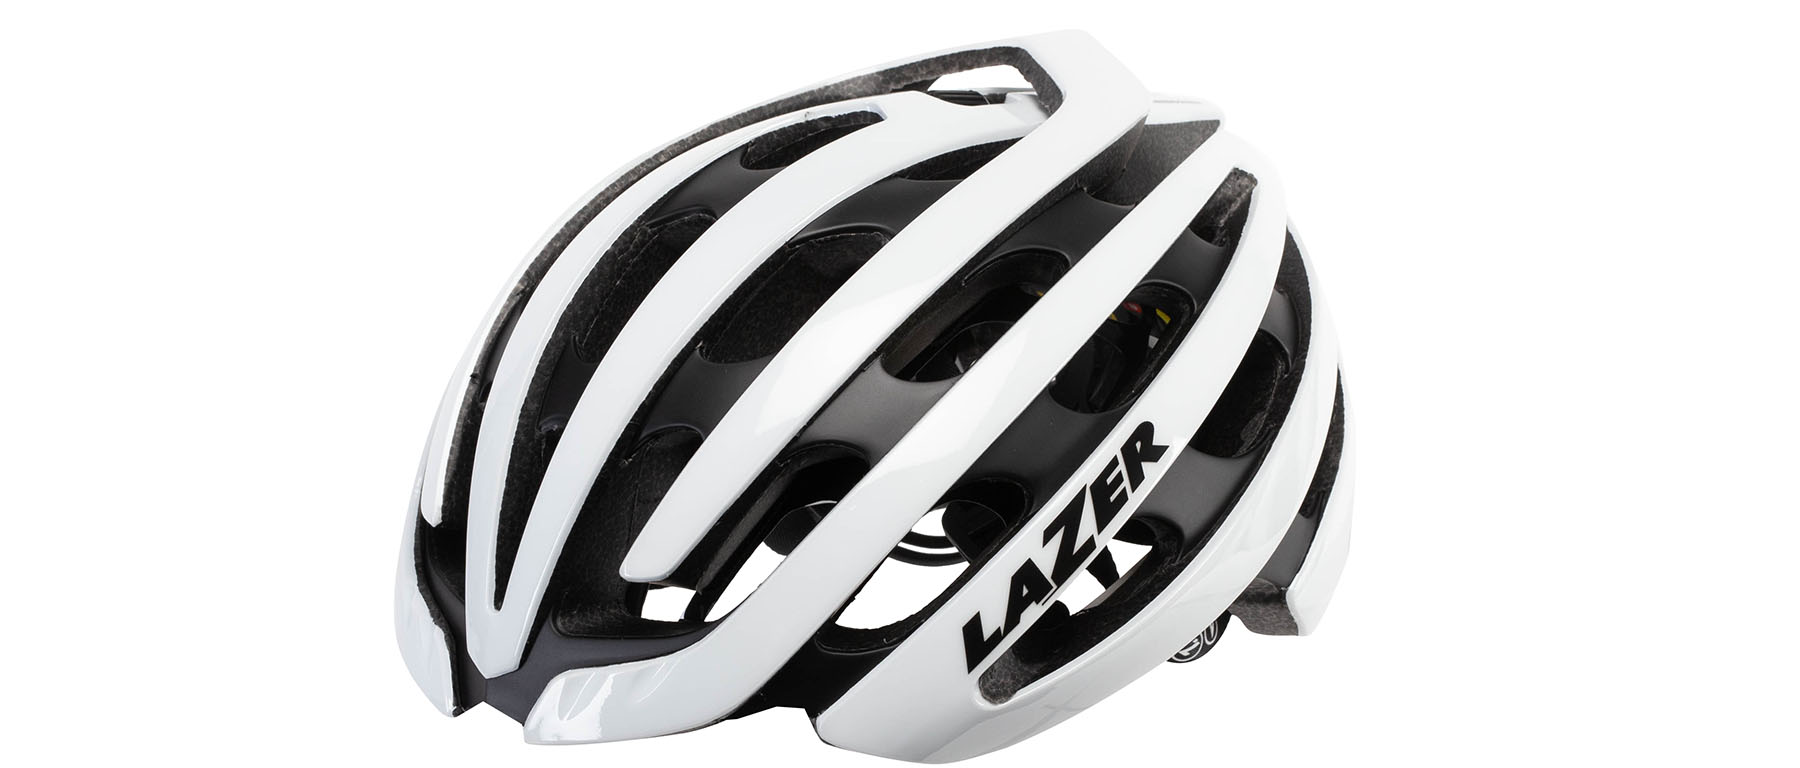 Lazer Z1 MIPS Helmet